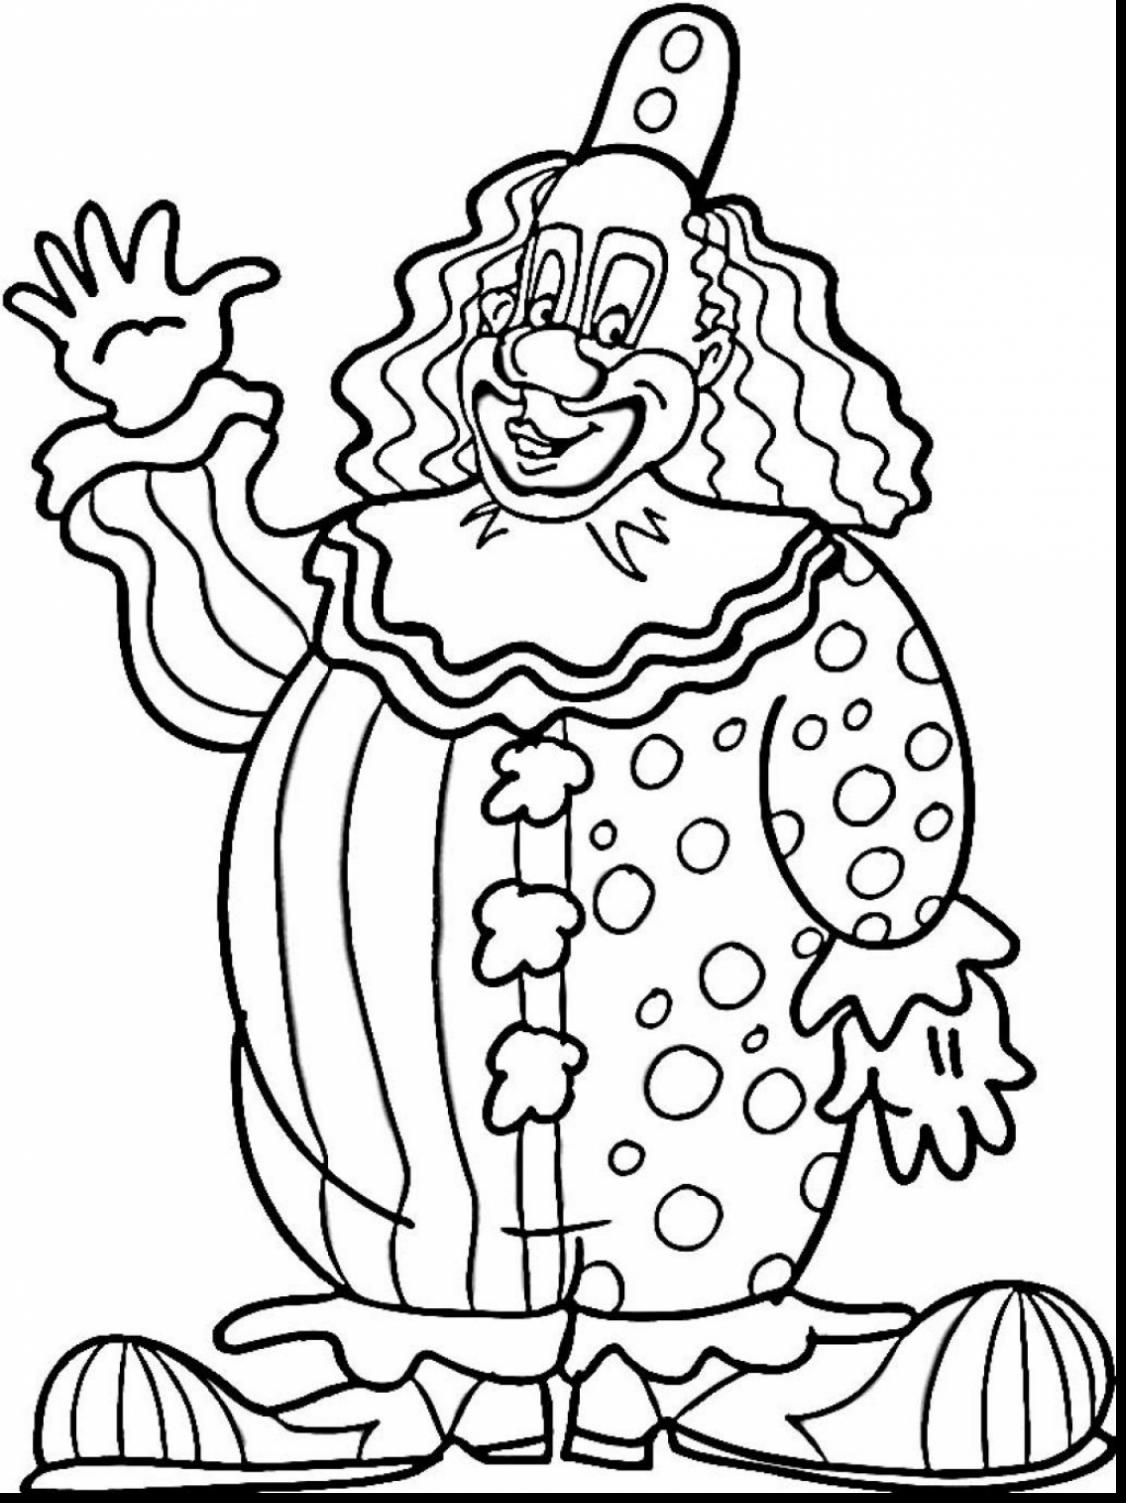 Клоун раскраска для детей 4 5 лет. Клоун раскраска. Клоун раскраска для детей. Веселый клоун раскраска. Раскраска весёлый клоун для детей.